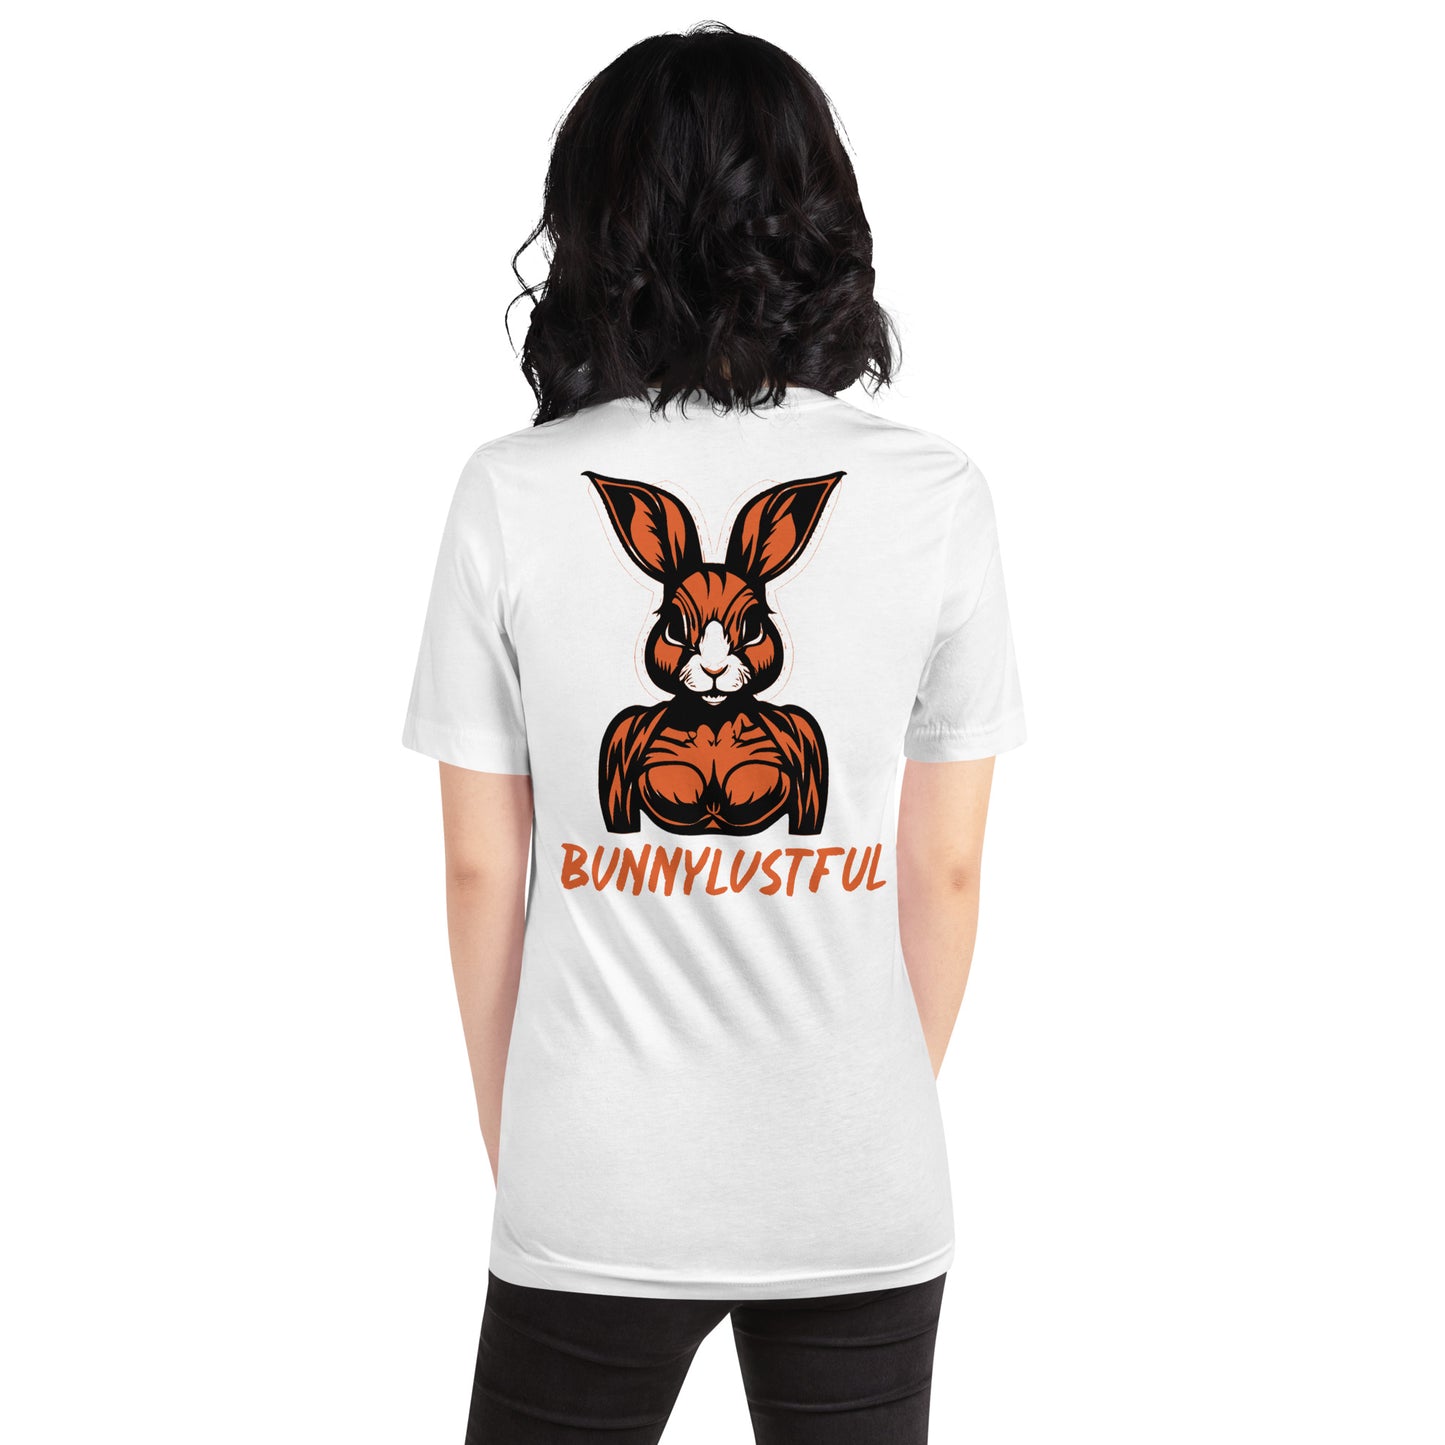 "Bunnylustful" t-shirt